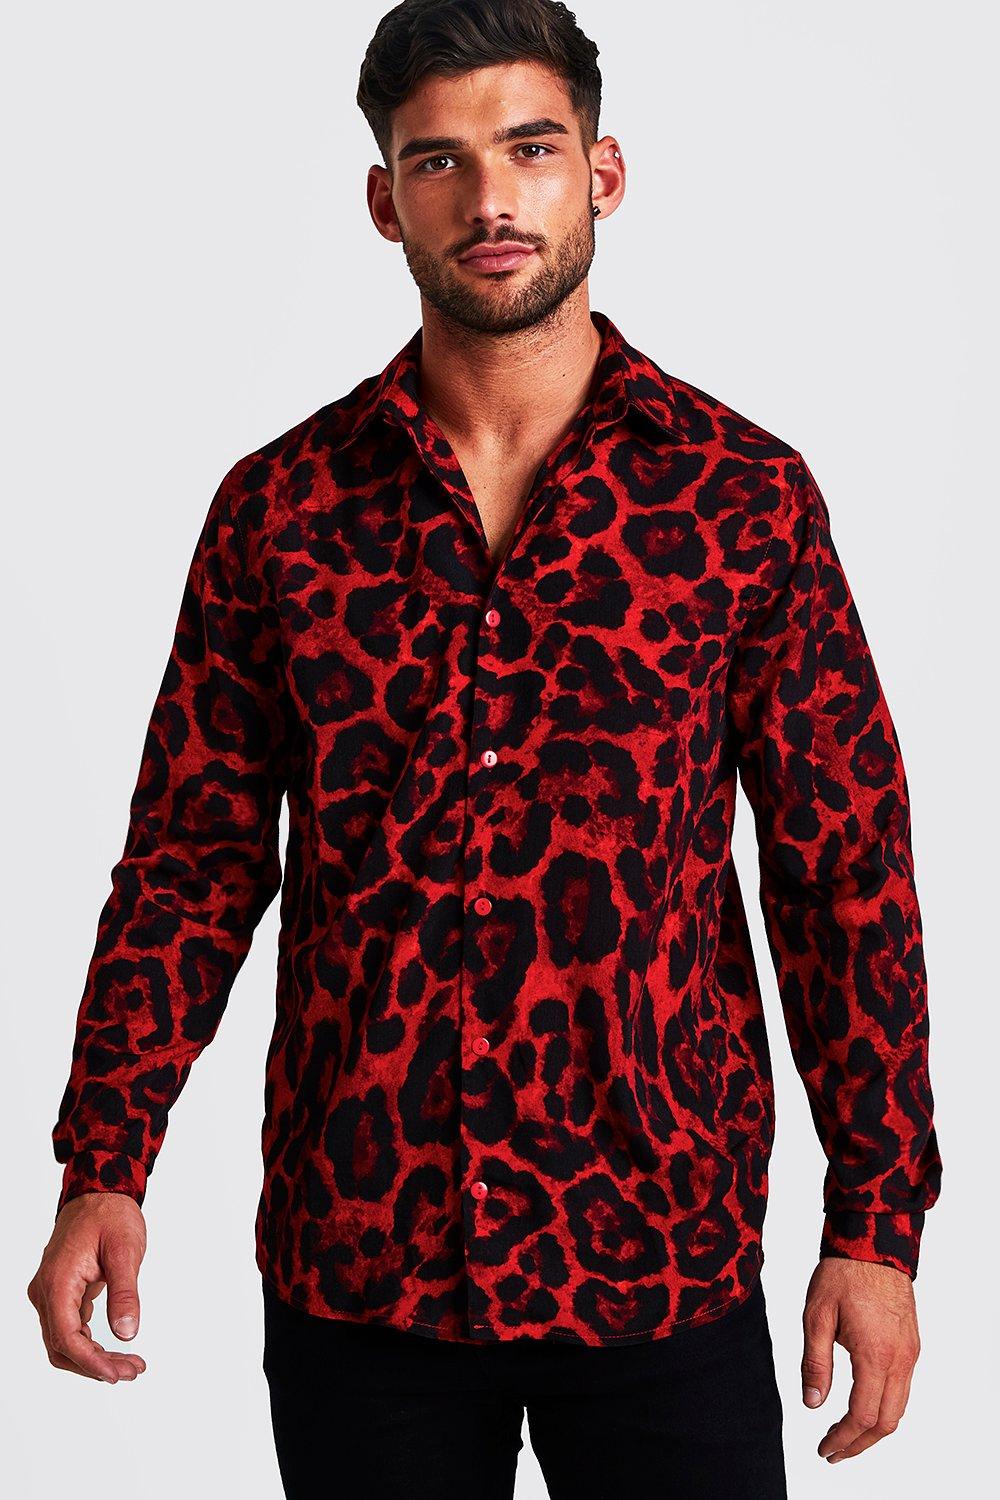 red animal print blouse